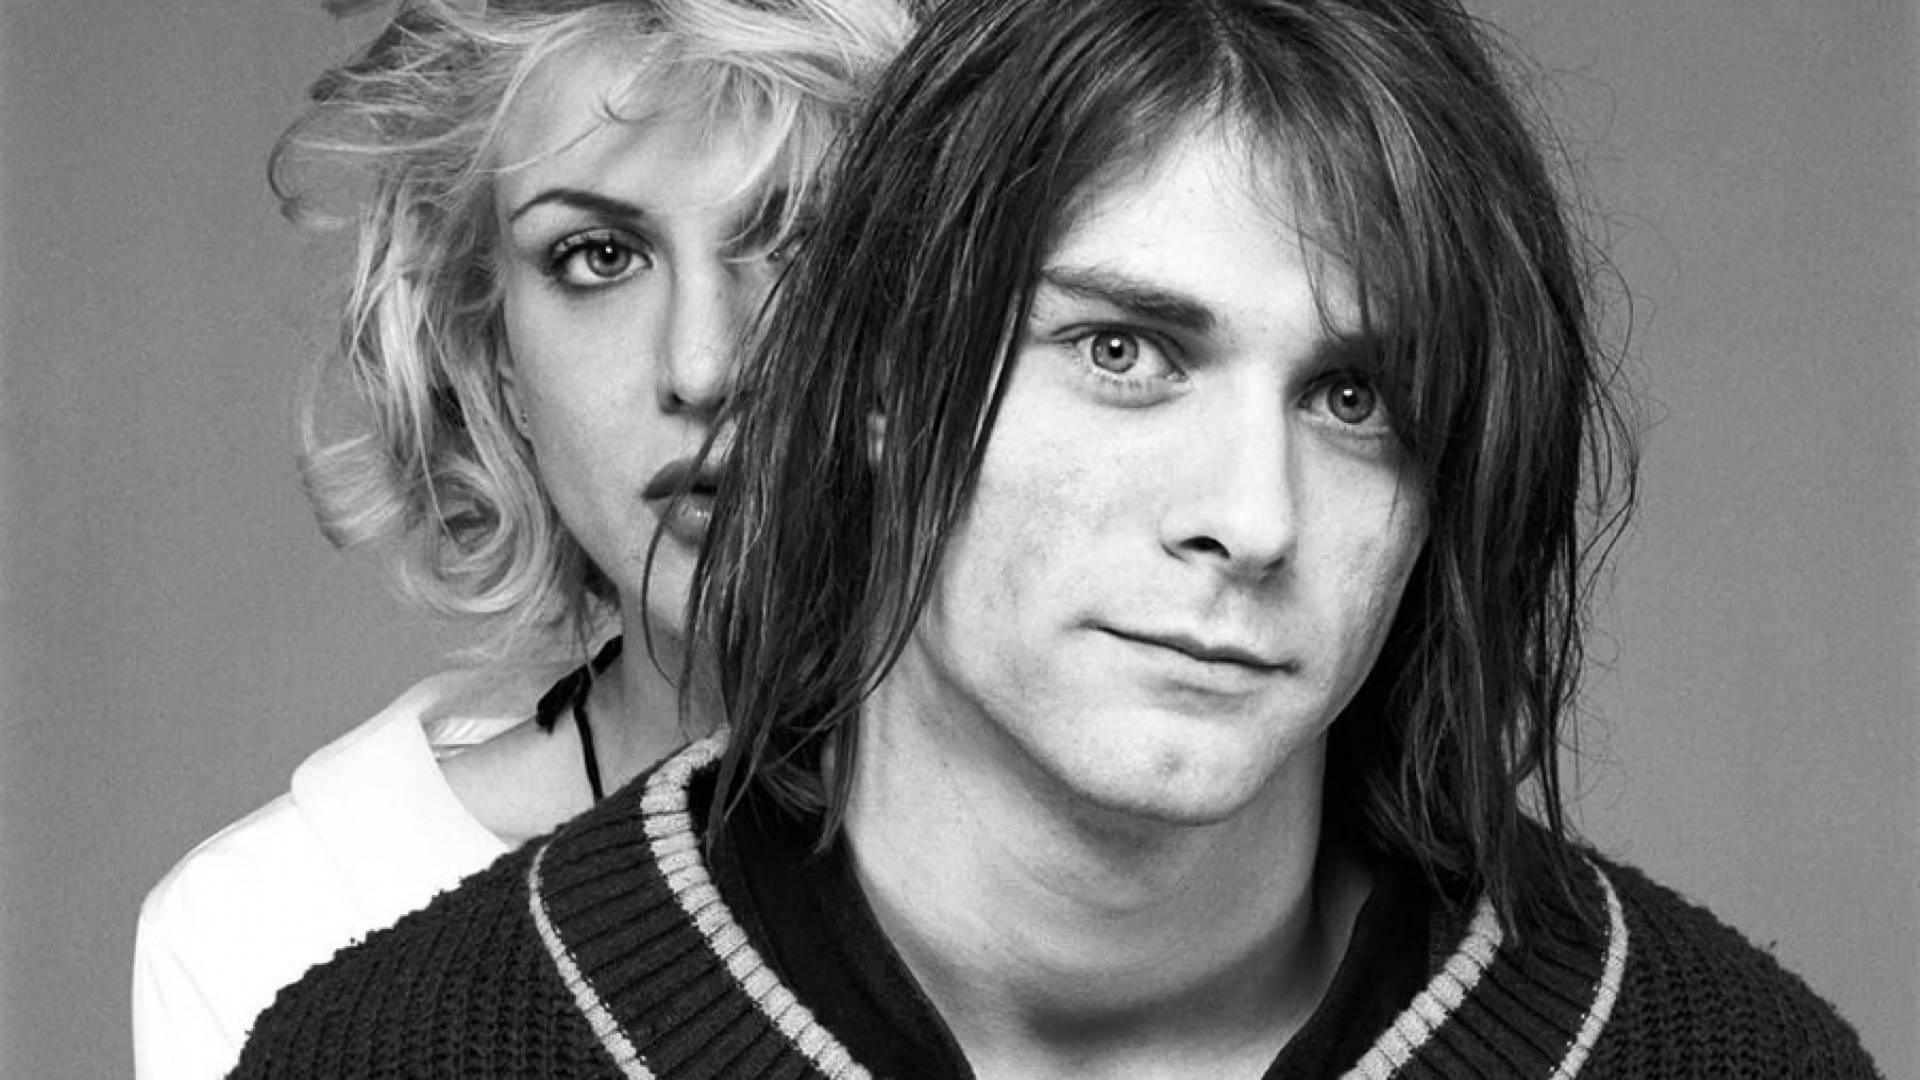 Kurt Cobain With Courtney Love Background